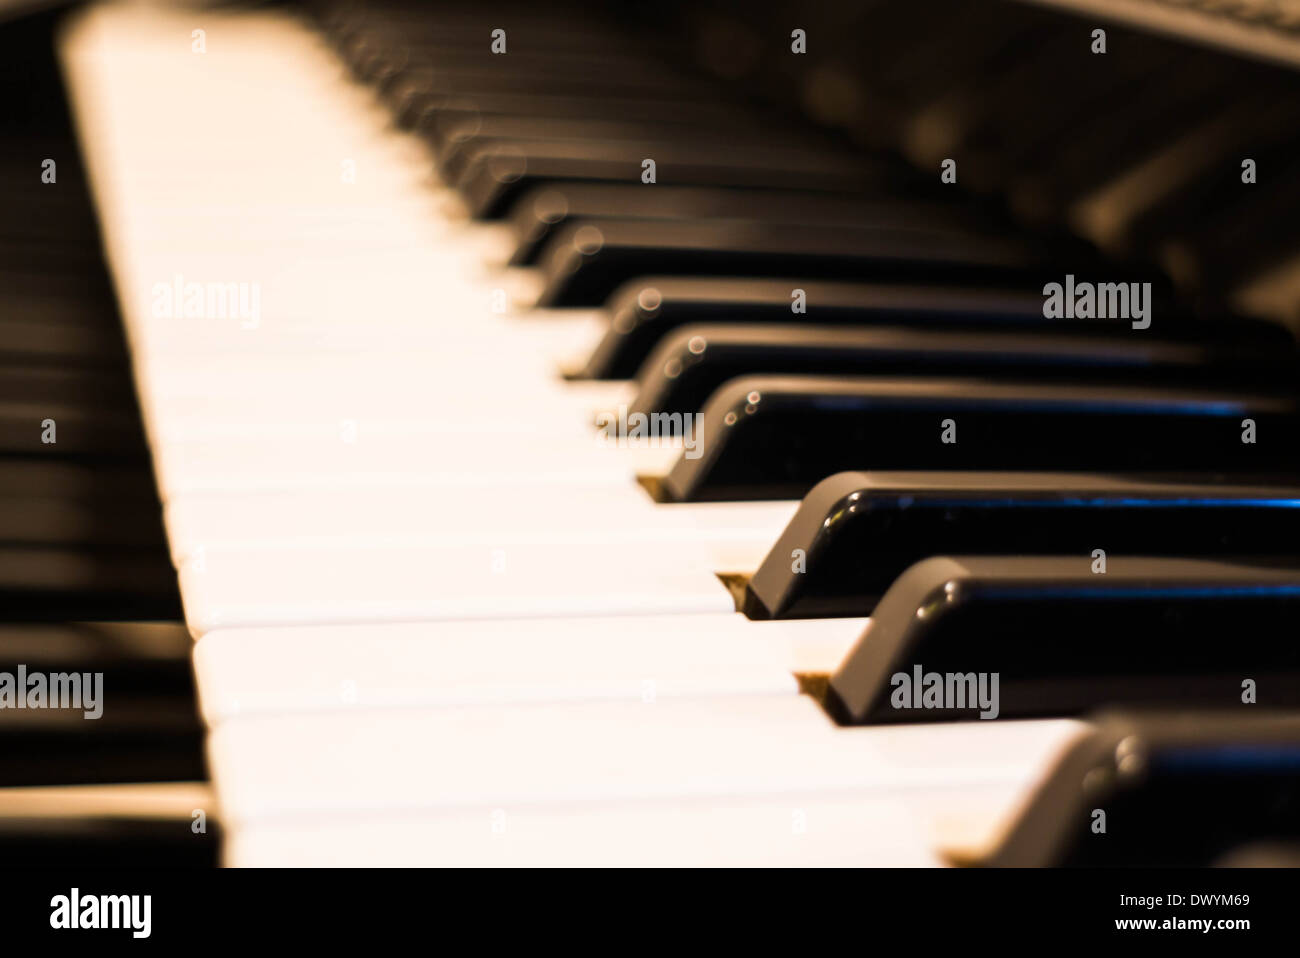 Closeup keyboard of electronic electone, stock photo Stock Photo